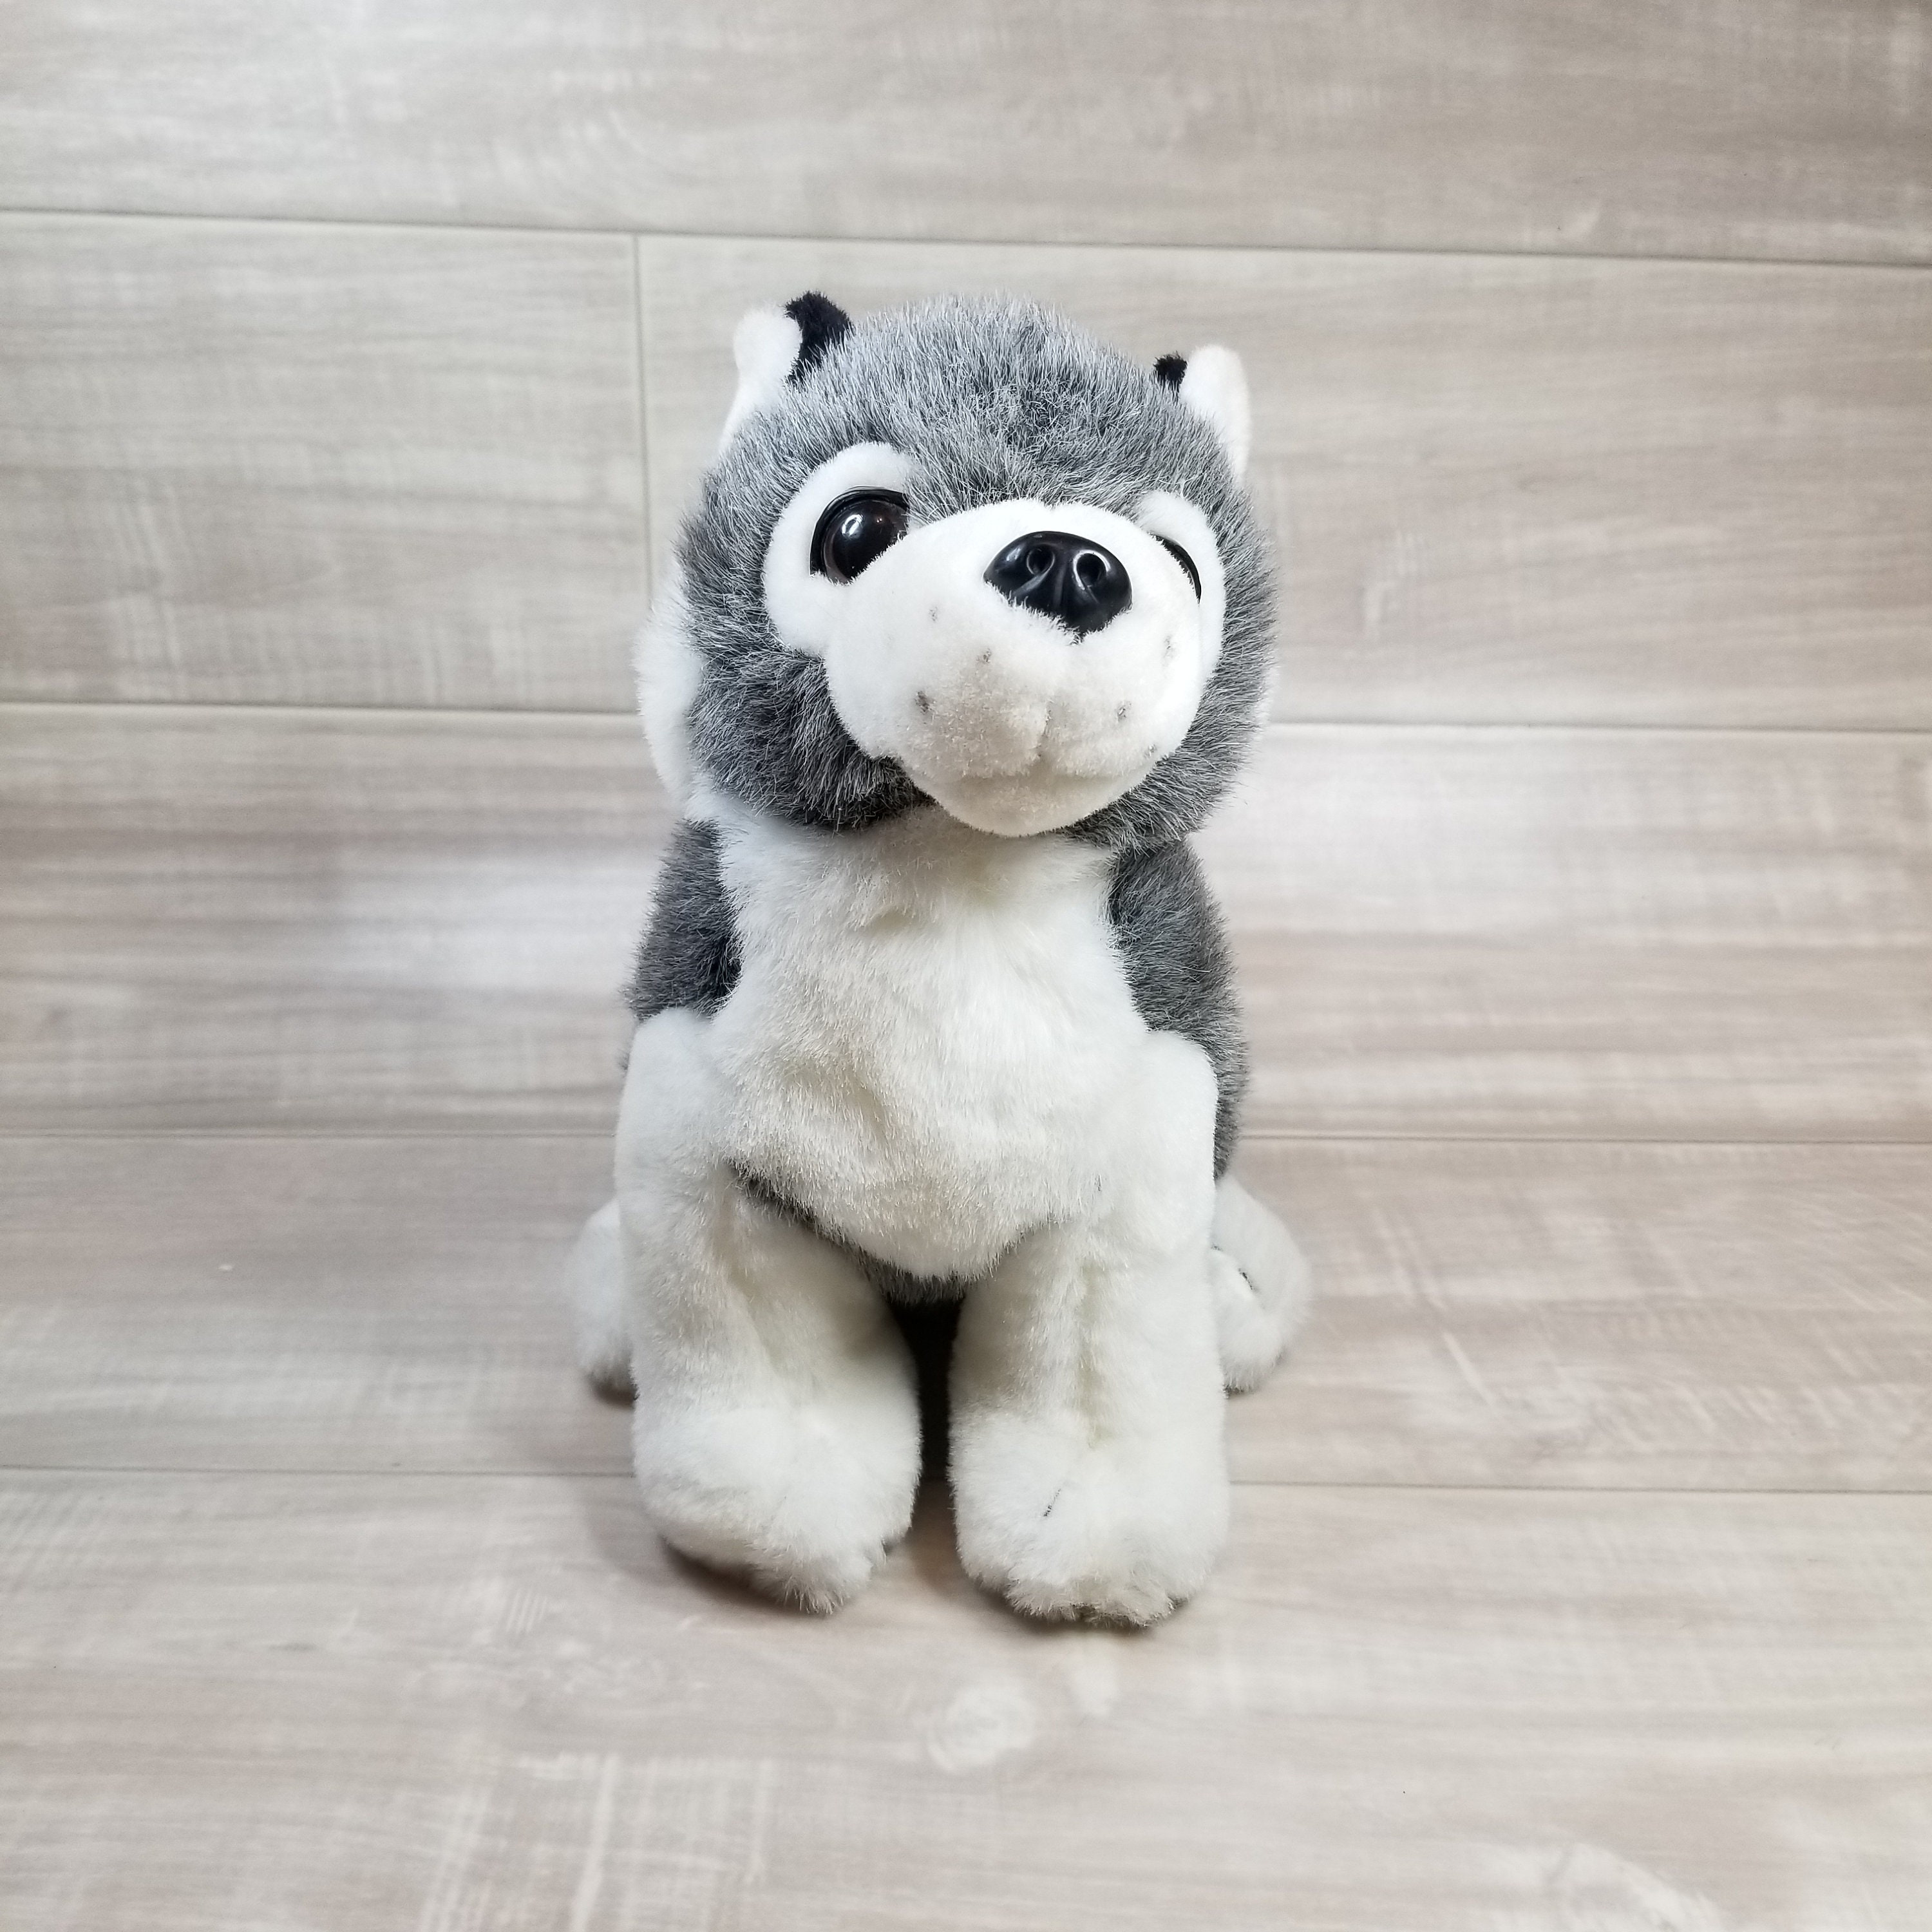 The Stuffed Animal Northern Wildlife Gifts Plush Husky Dog Soft Canada